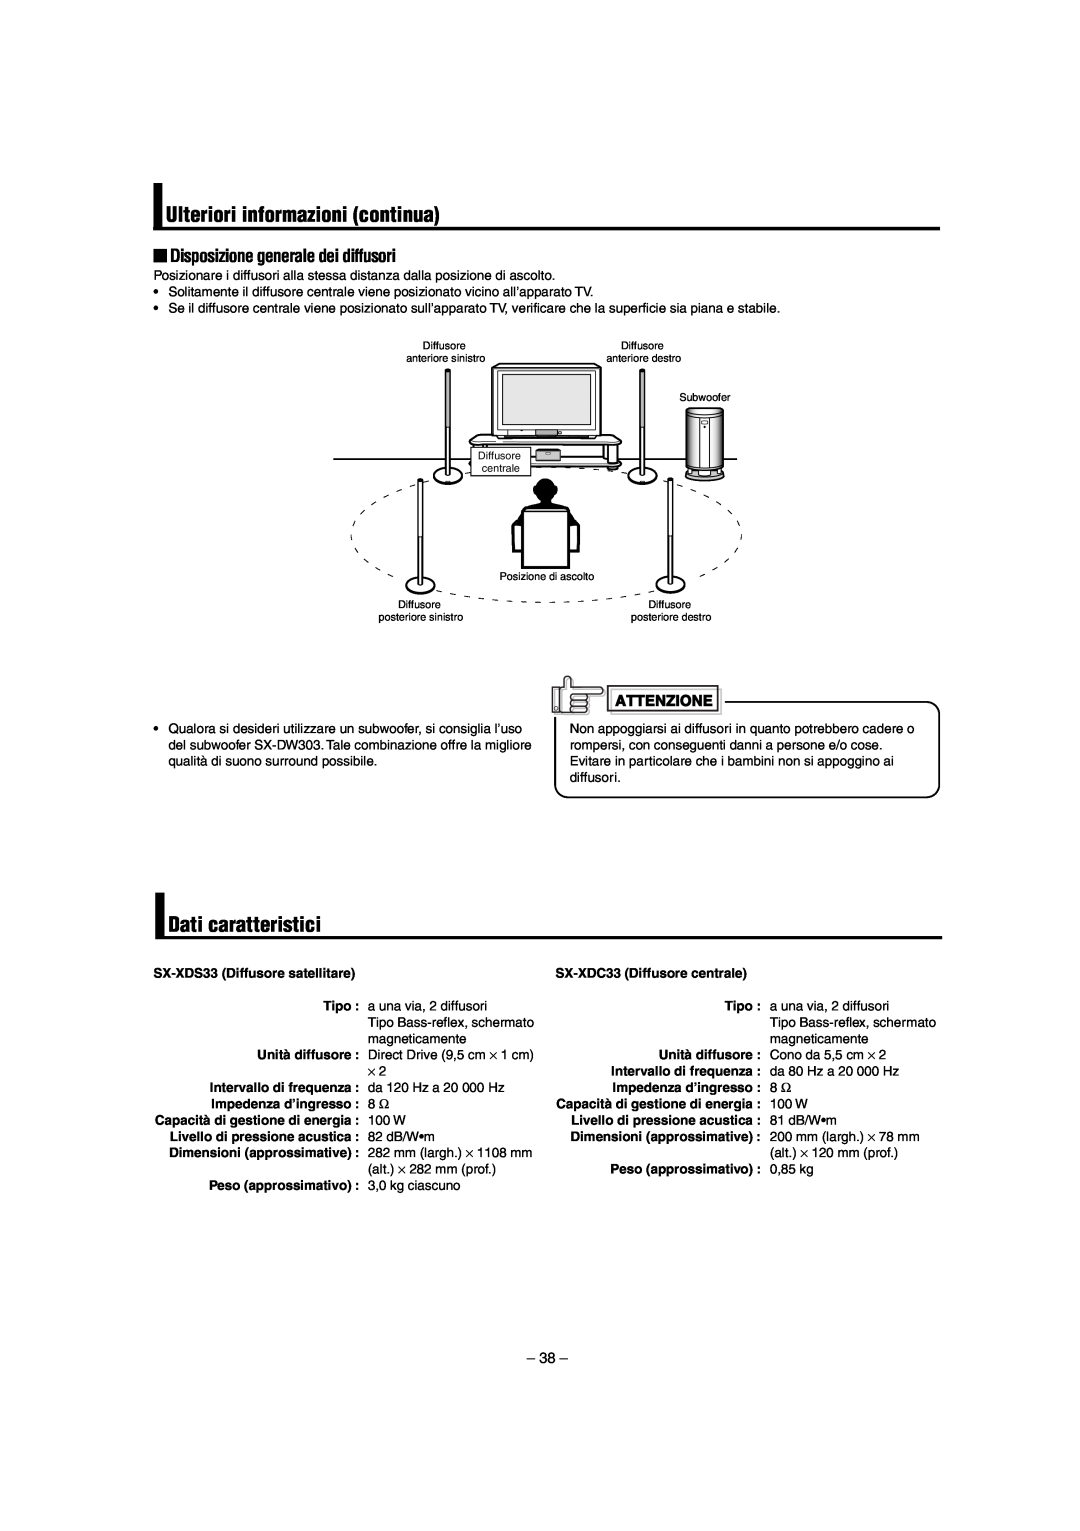 JVC LVT0953-001B manual Ulteriori informazioni continua, Dati caratteristici, Disposizione generale dei diffusori 